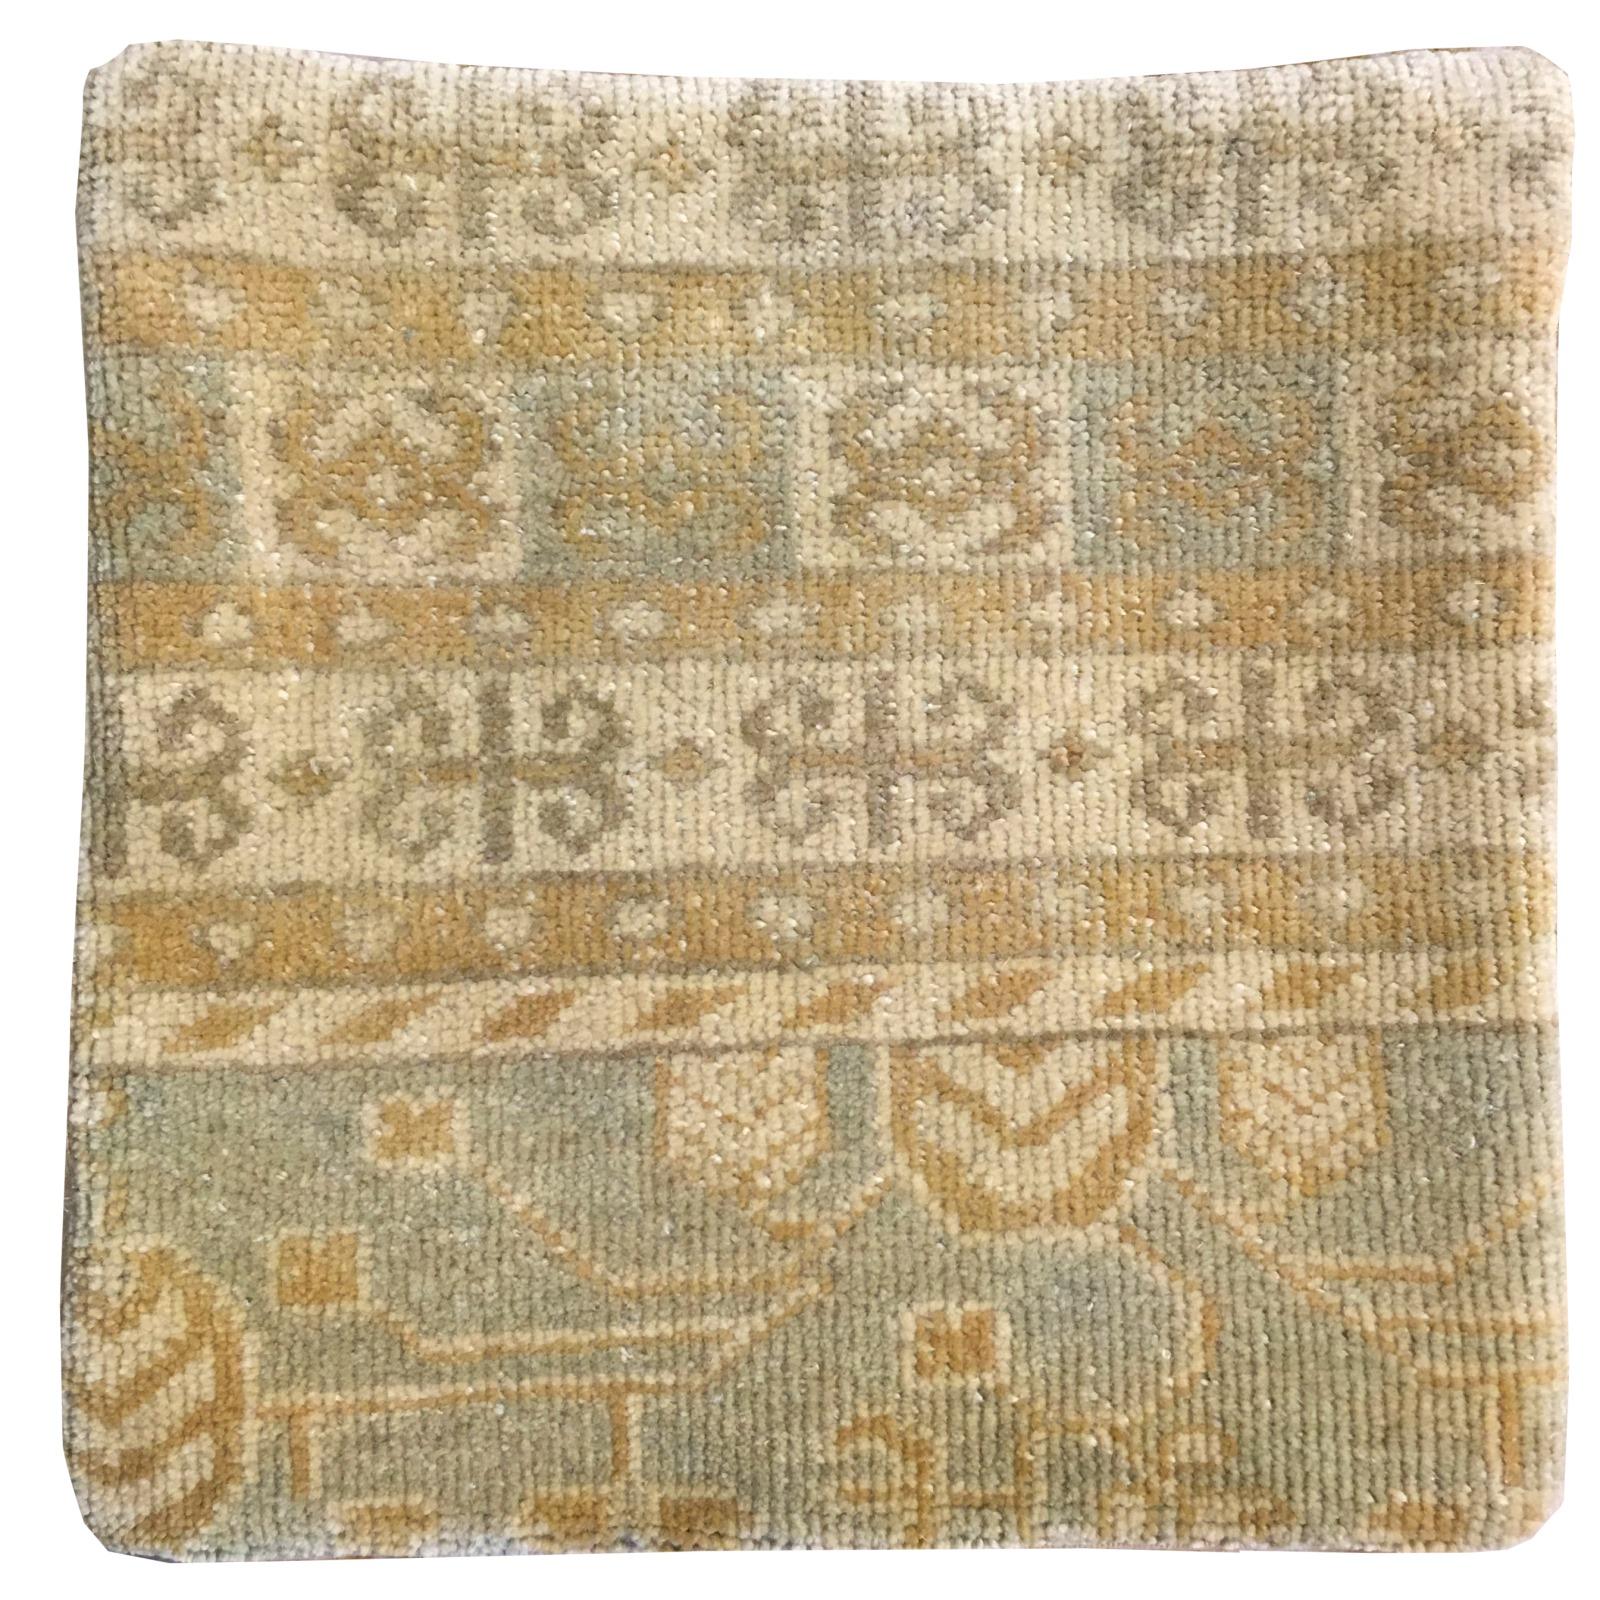 Khotan Samarkand Decorative Hand-Knotted Rug Pillow Cover